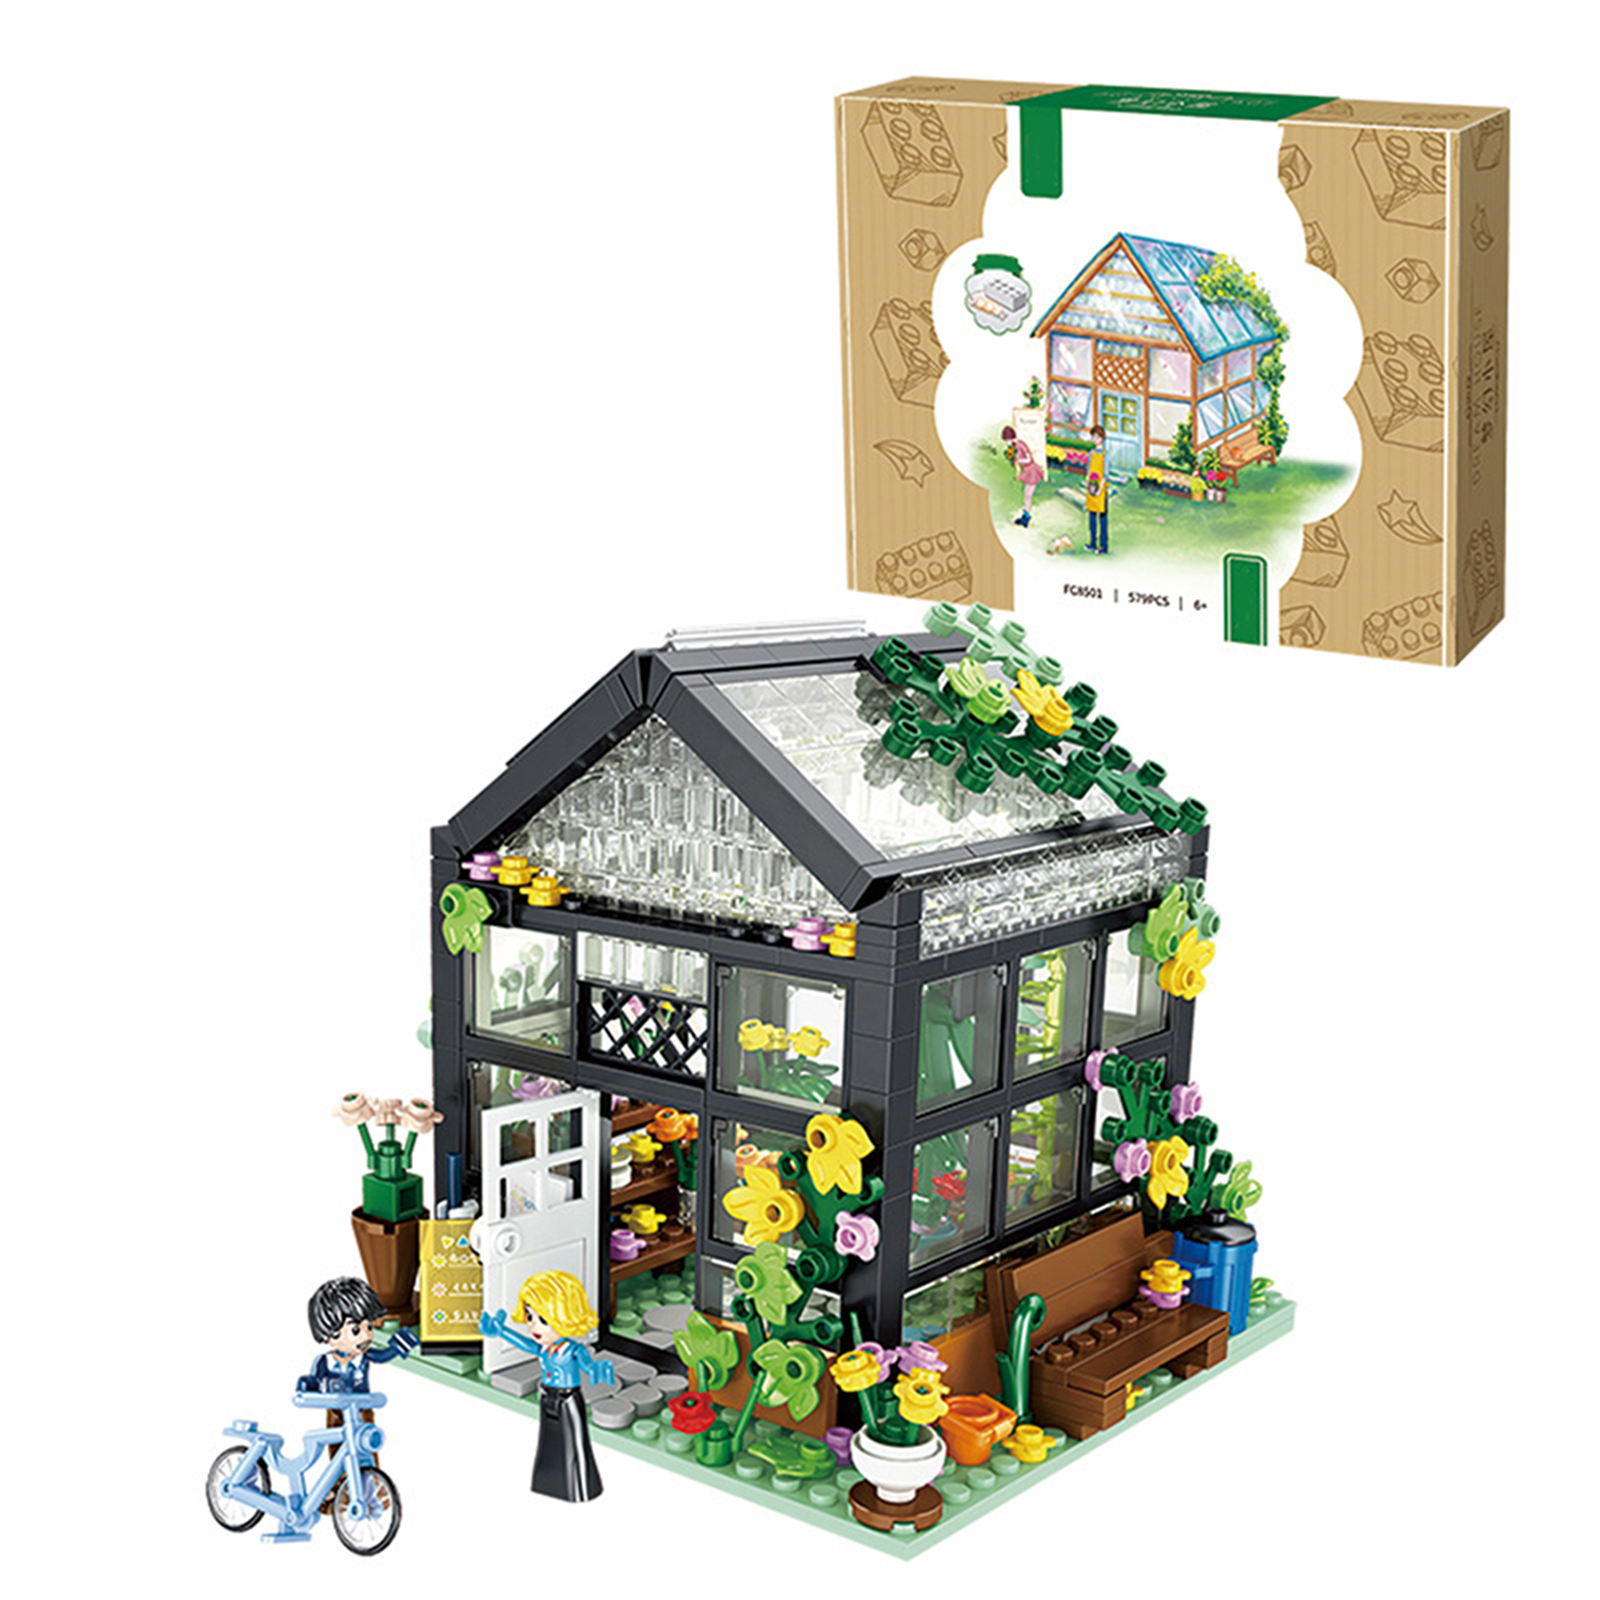 Creative City Street View Shop Building Blocks Toys House Architecture Puzzle Figures Bricks Toys For Kids flower shop